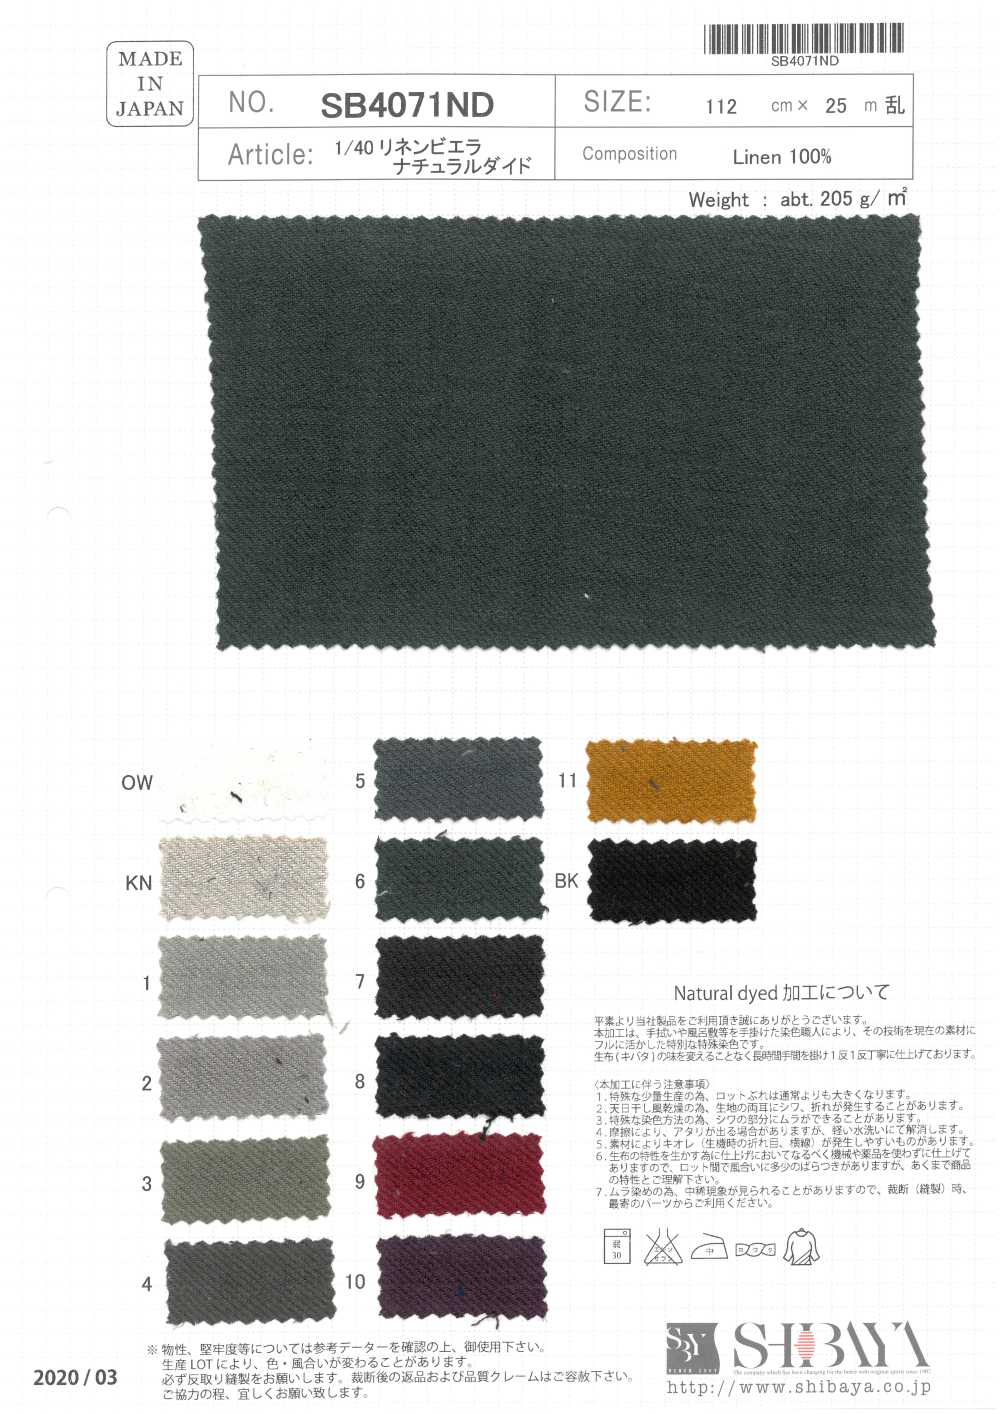 SB4071ND 1/40 Viyella Teinte Naturelle[Fabrication De Textile] SHIBAYA